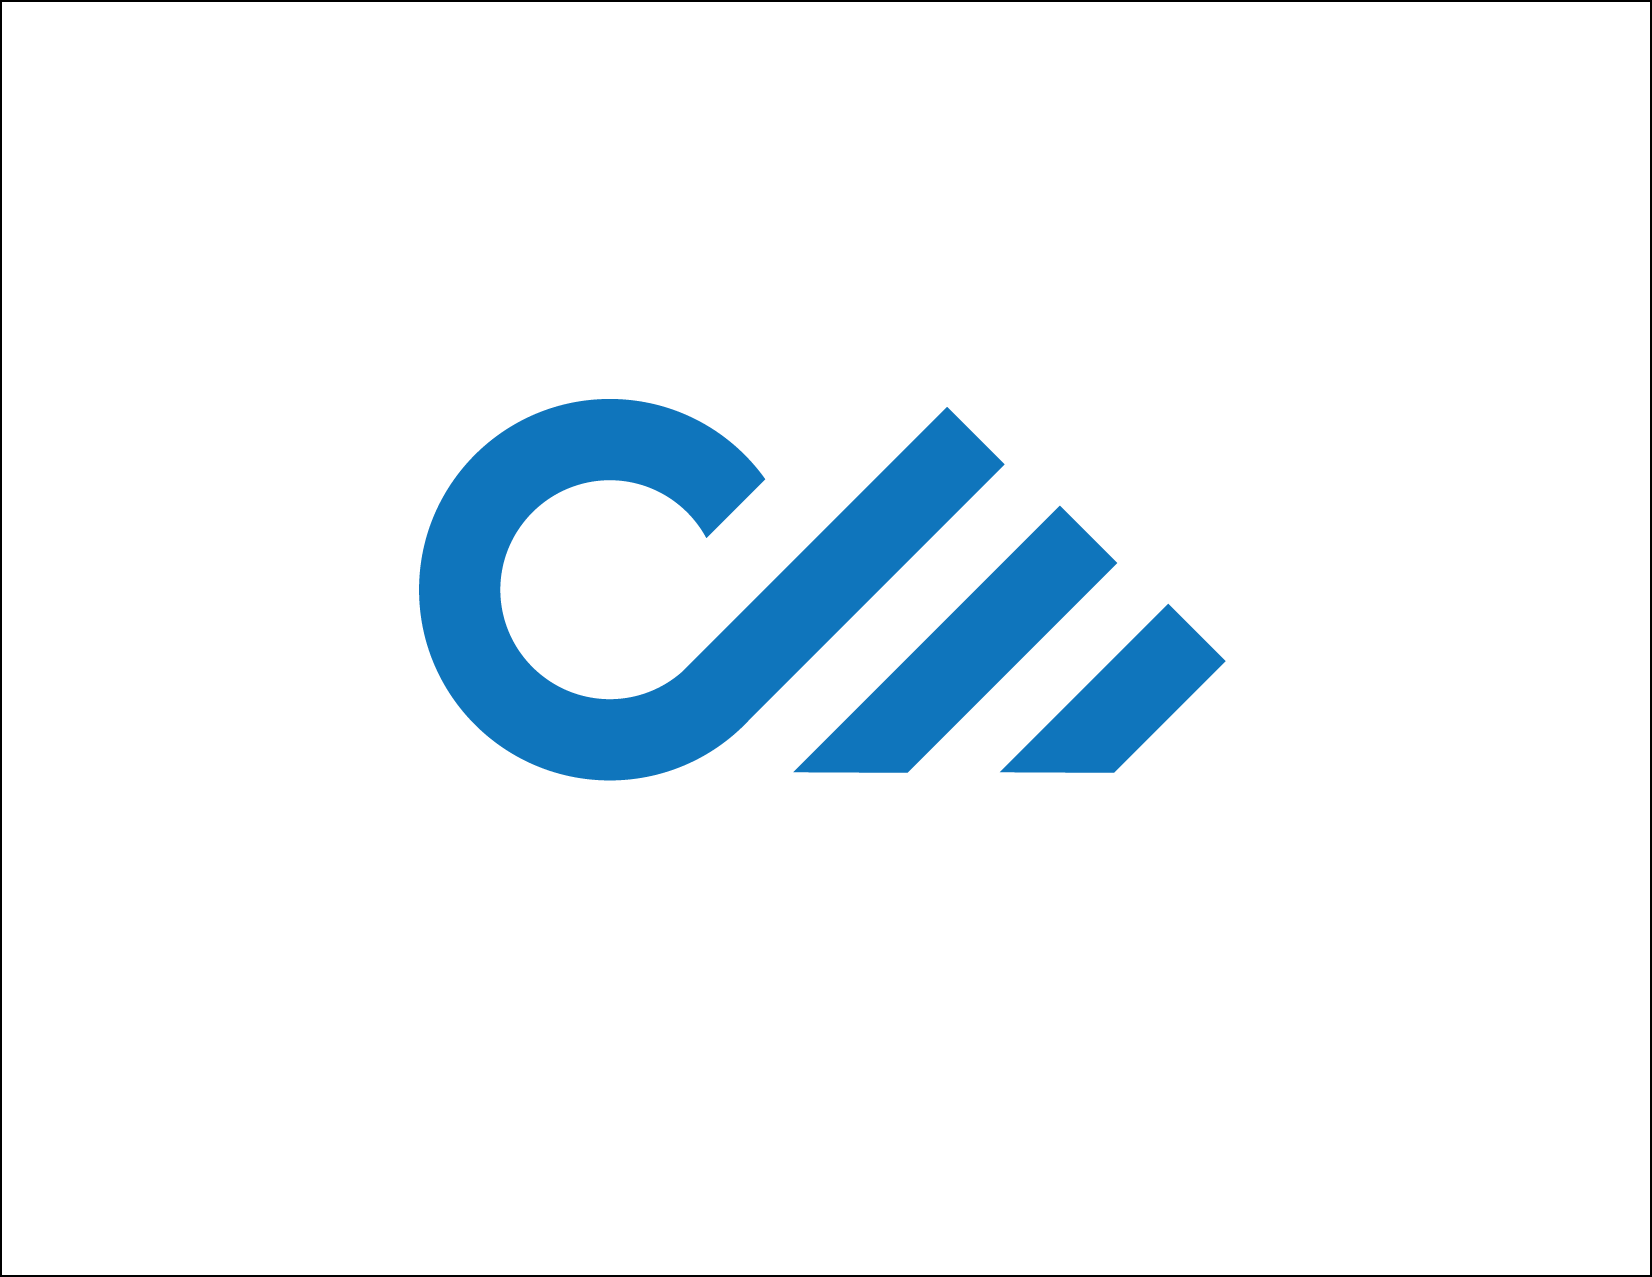 Cm Logo - CM Logo | About of logos